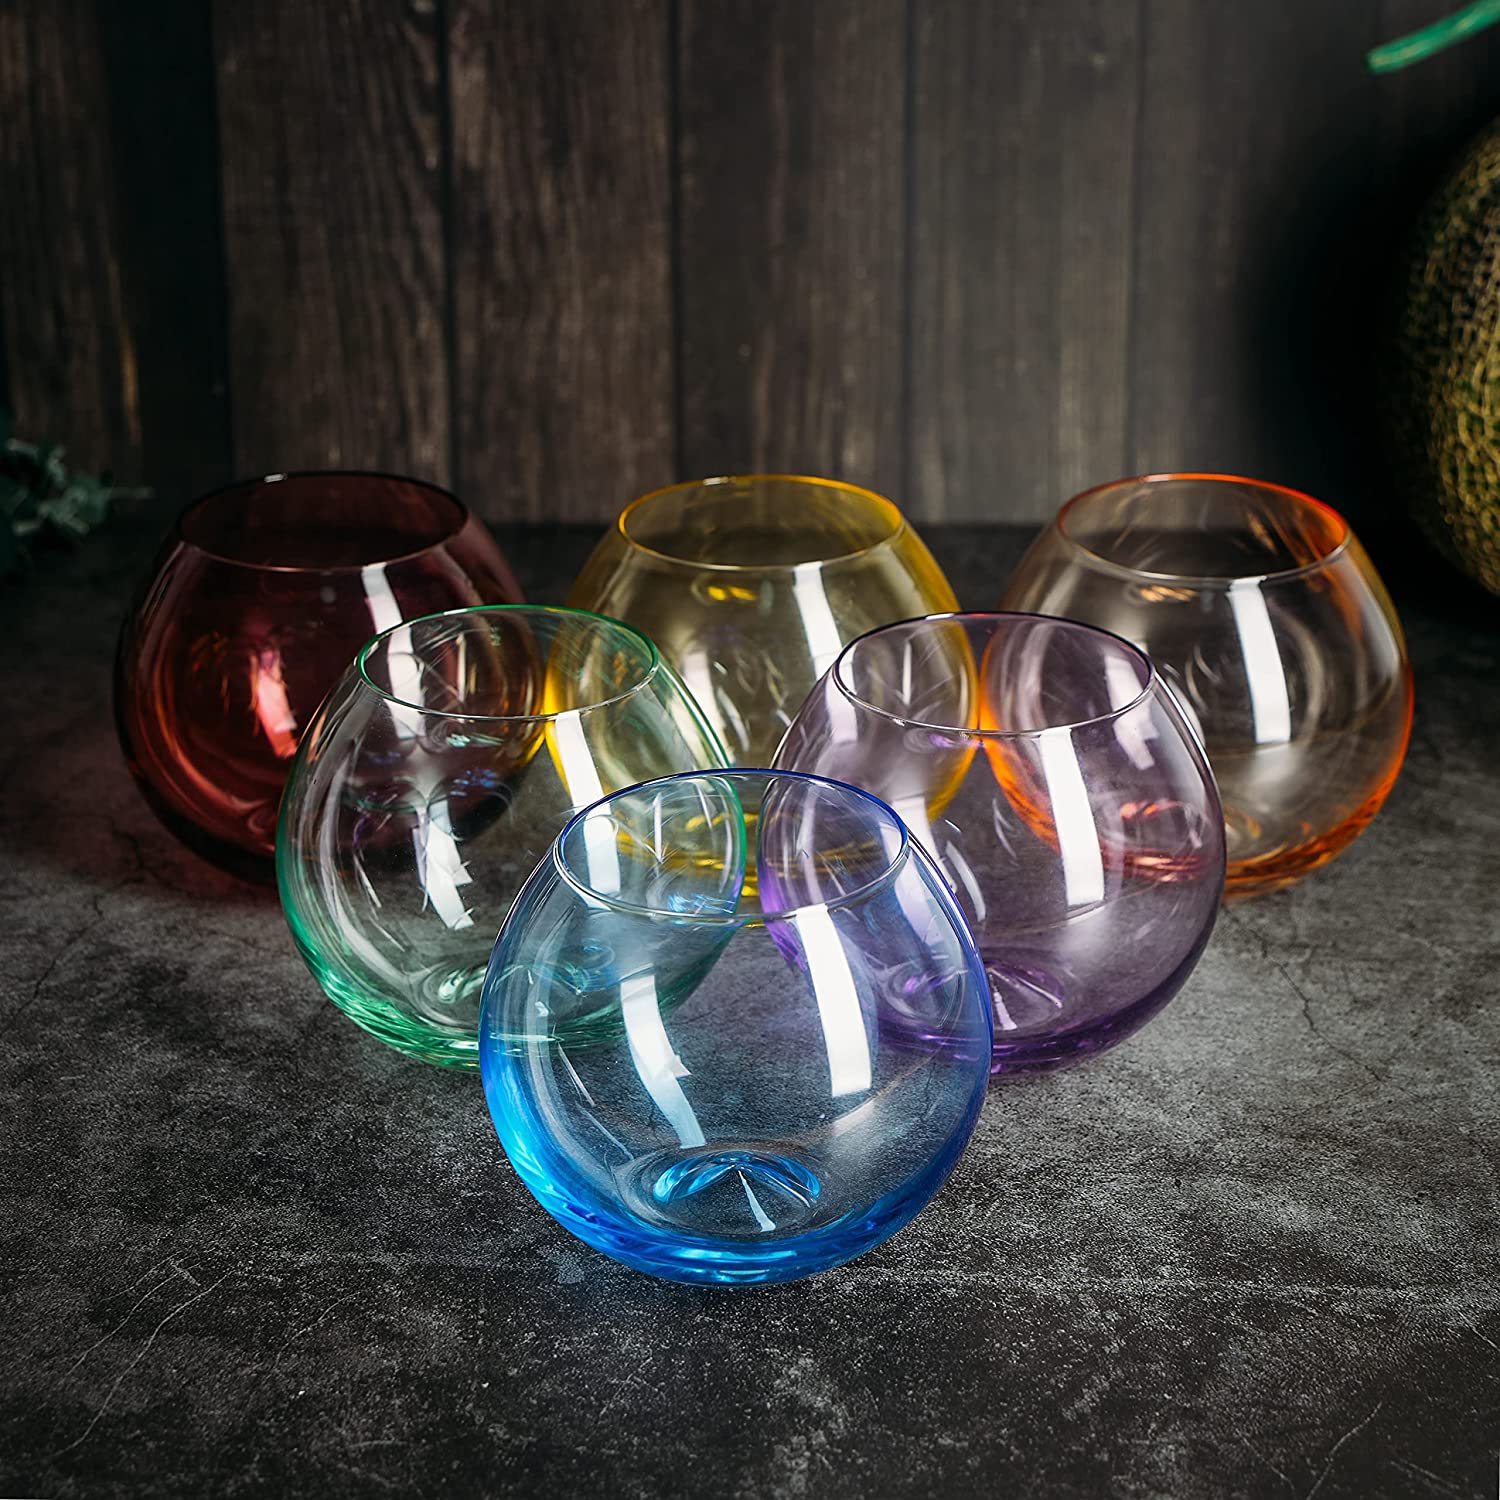 Saban Glassware Twisty Stemless Wine Glasses (Set of 6) in Rainbow